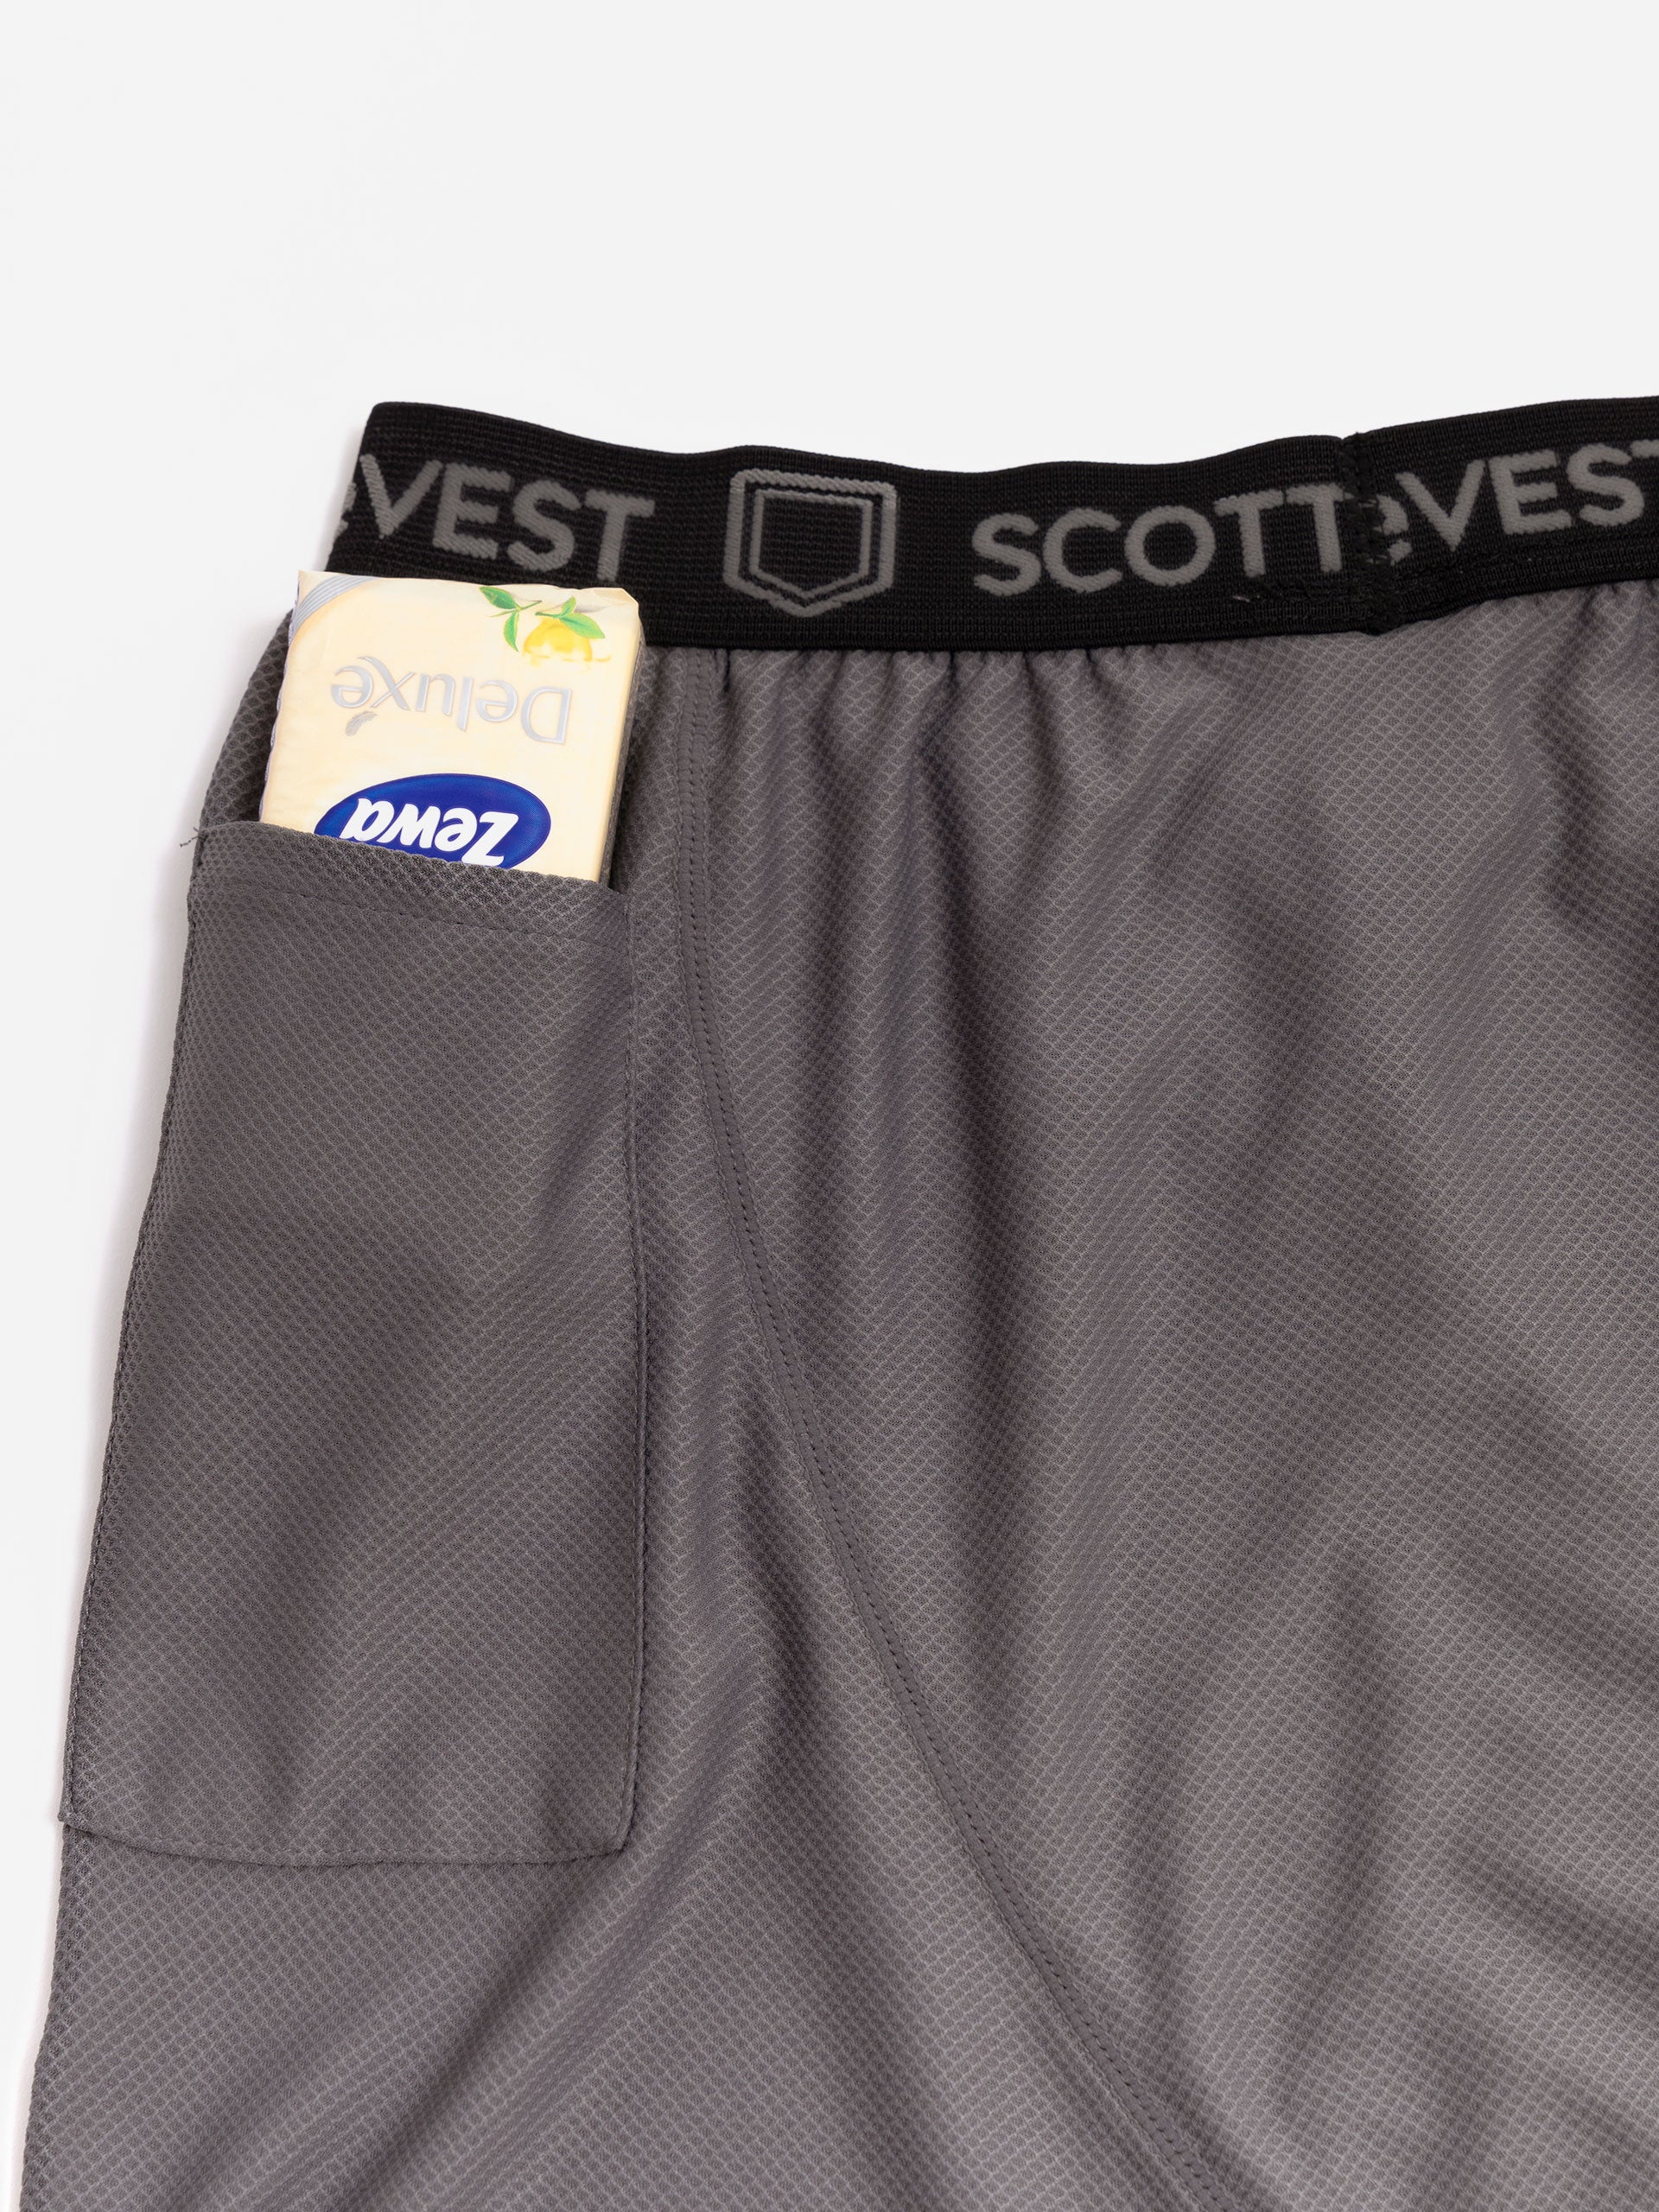 iHeartRaves Men's Anti-Theft Pocket Boxer Briefs - Pickpocket Proof Travel  Underwear S - 2XL